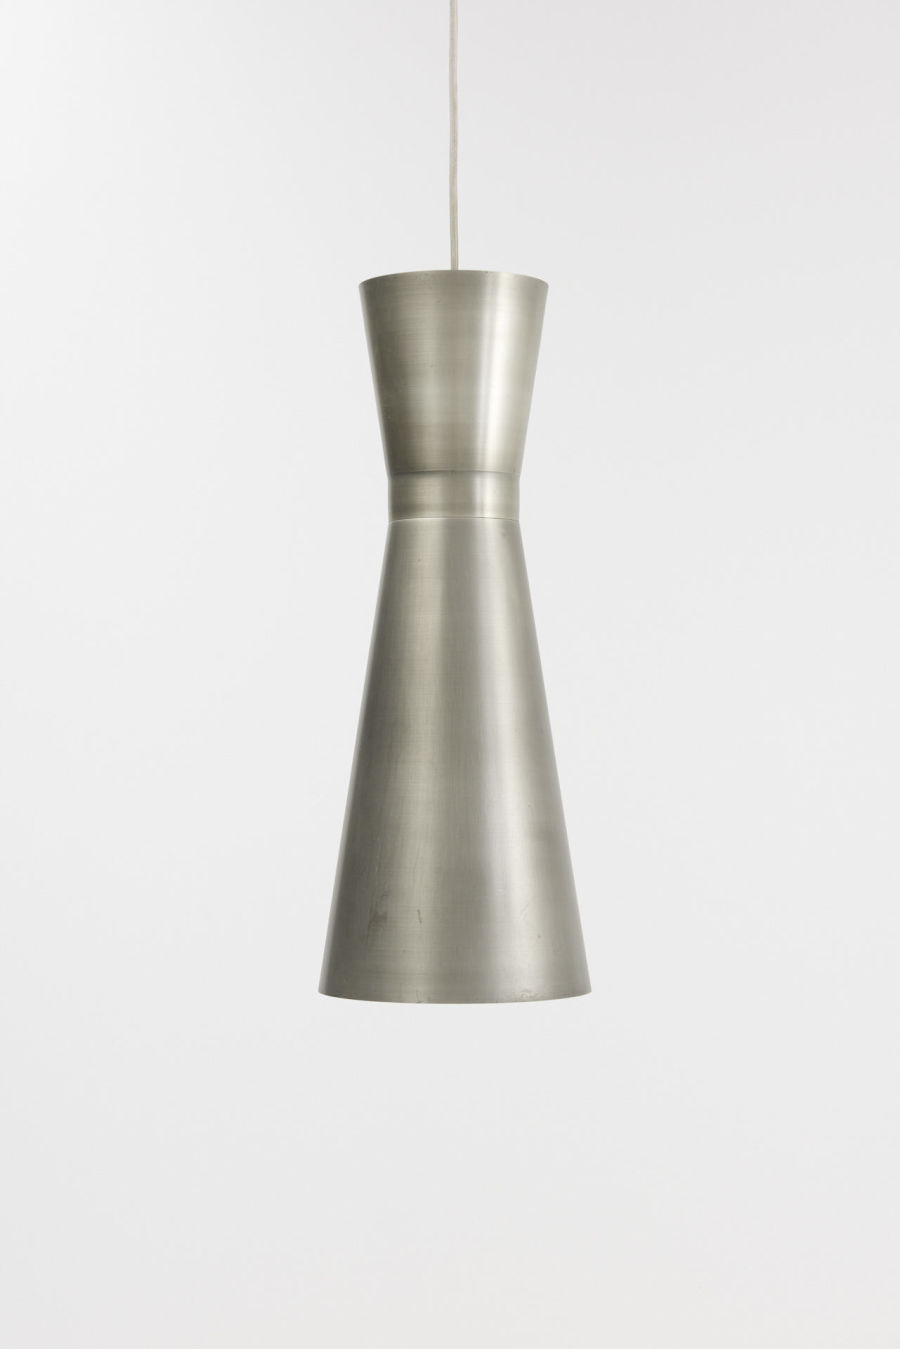 modestfurniture-vintage-2064-xl-pendant-lamp-stainless-steel01